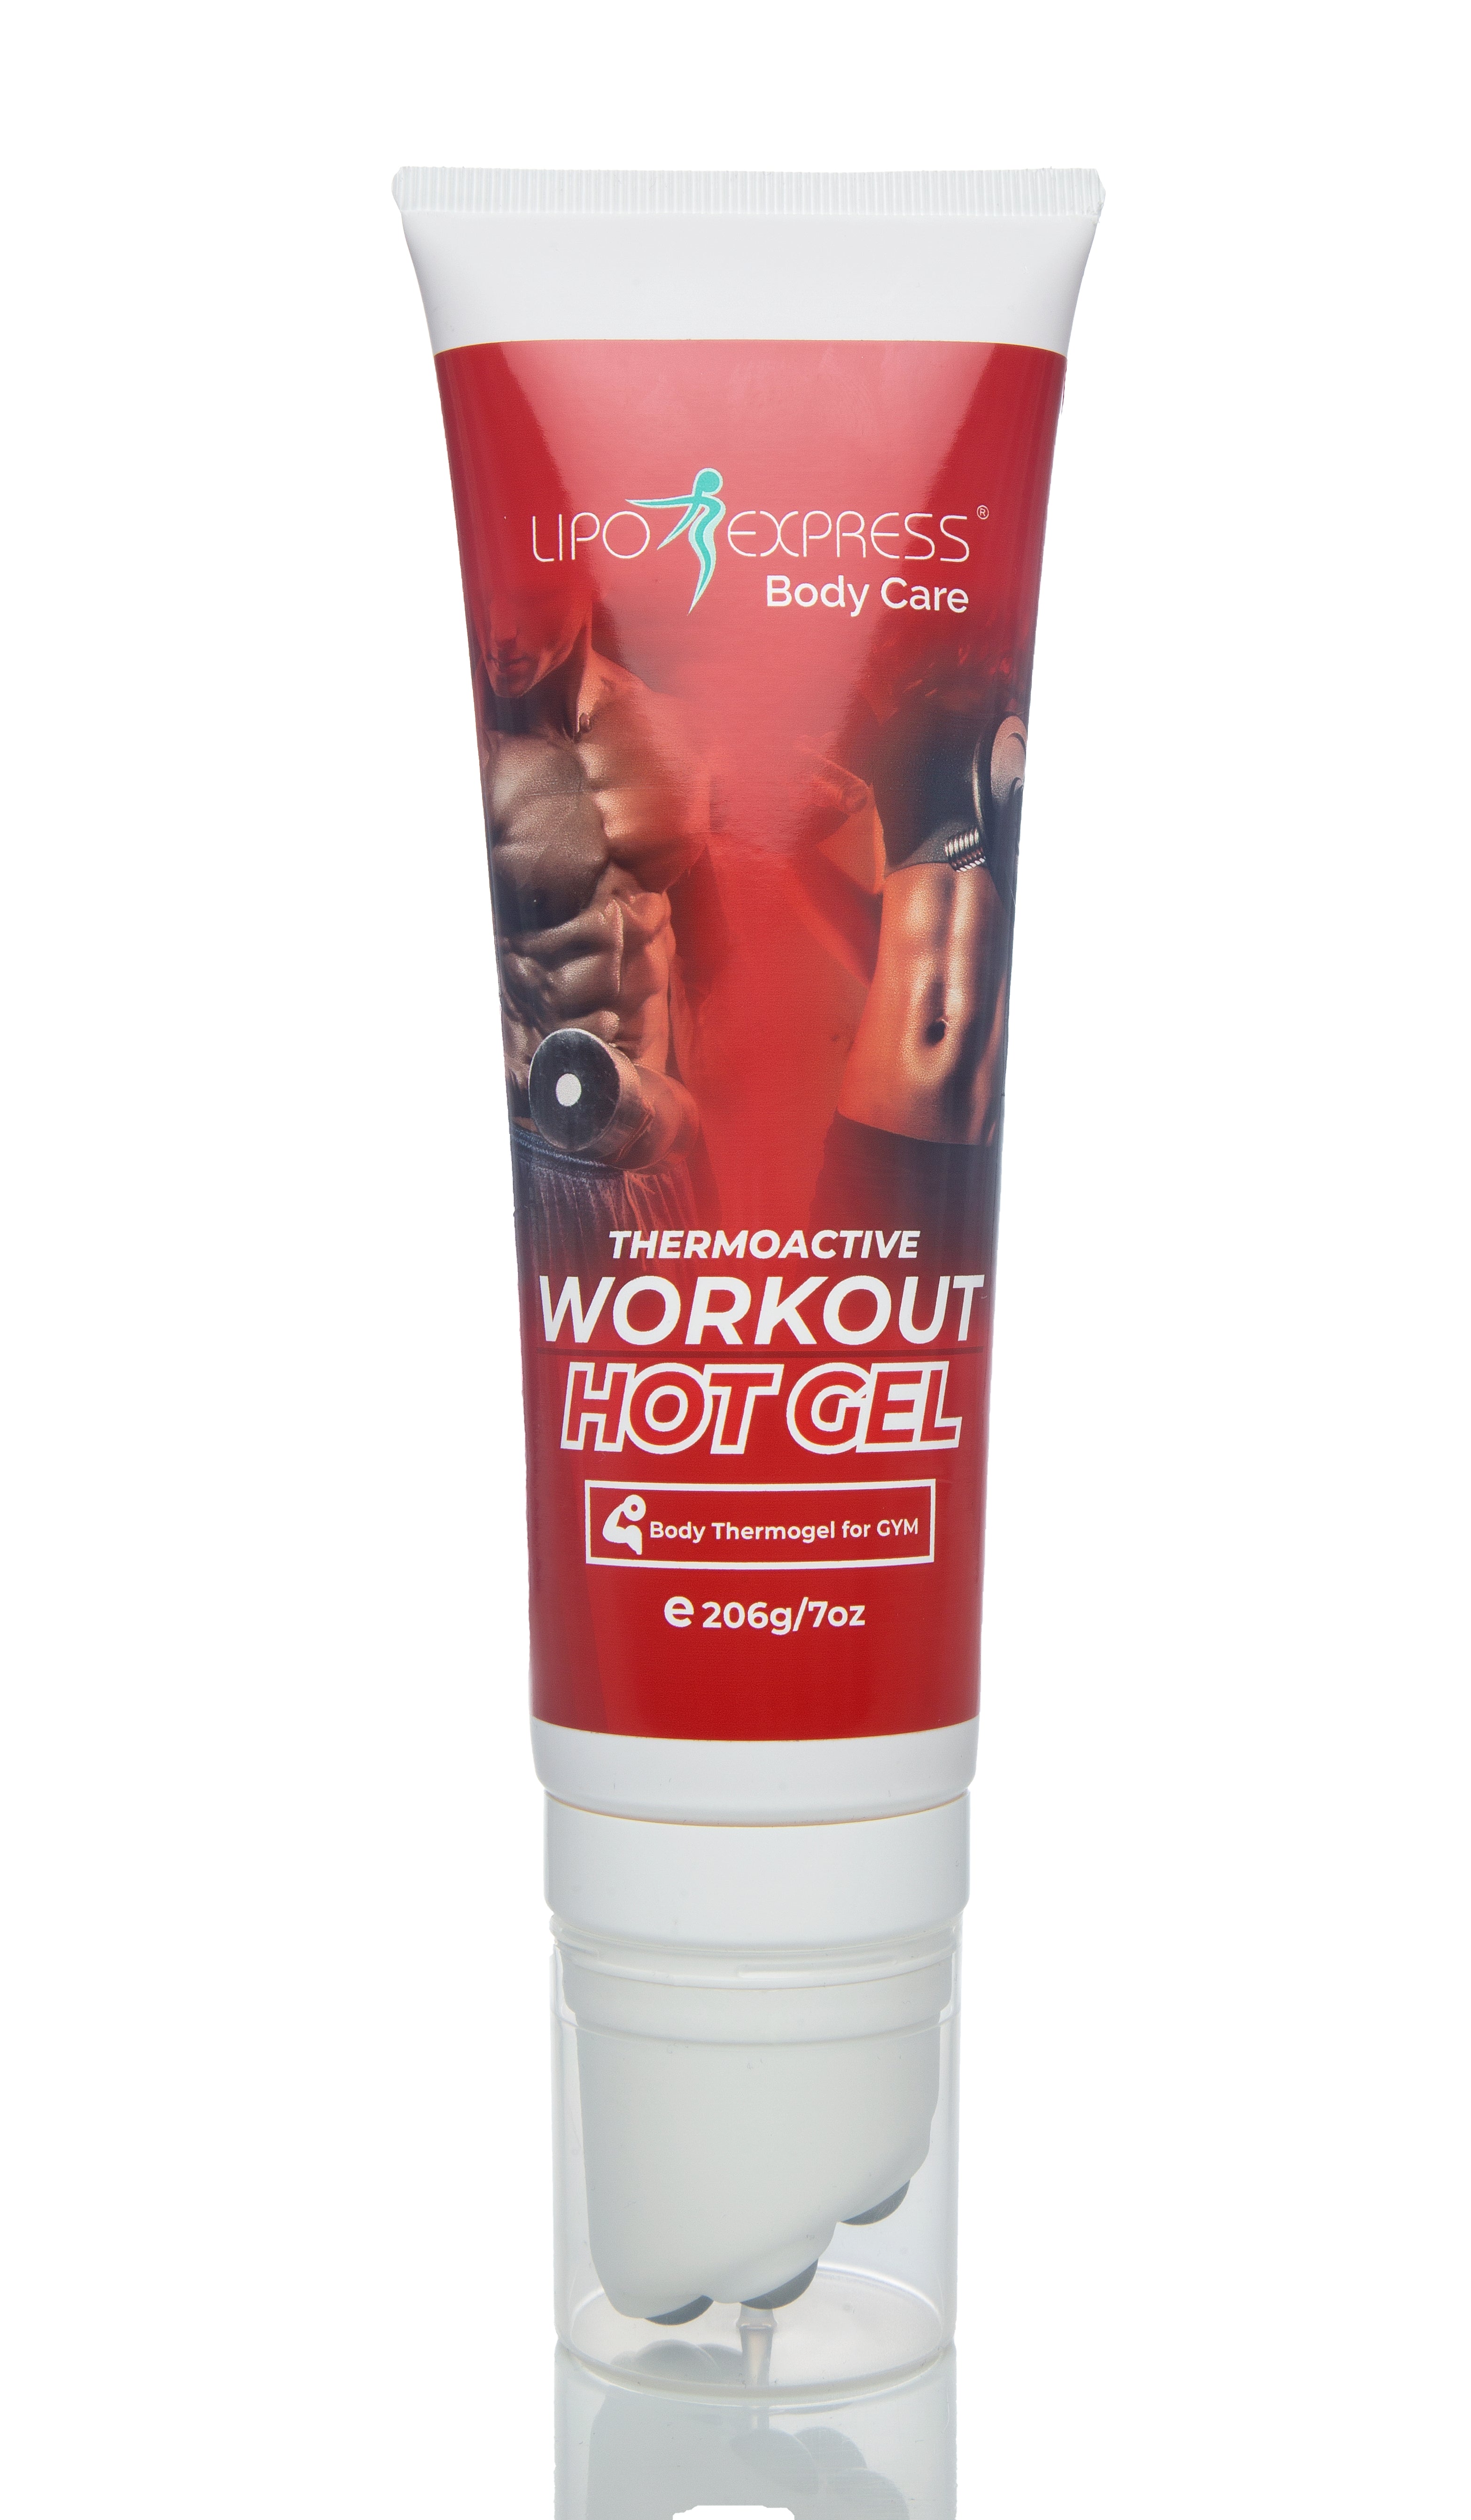 Lipo Express Thermoactive Workout Hot Gel Massage Ball 7oz